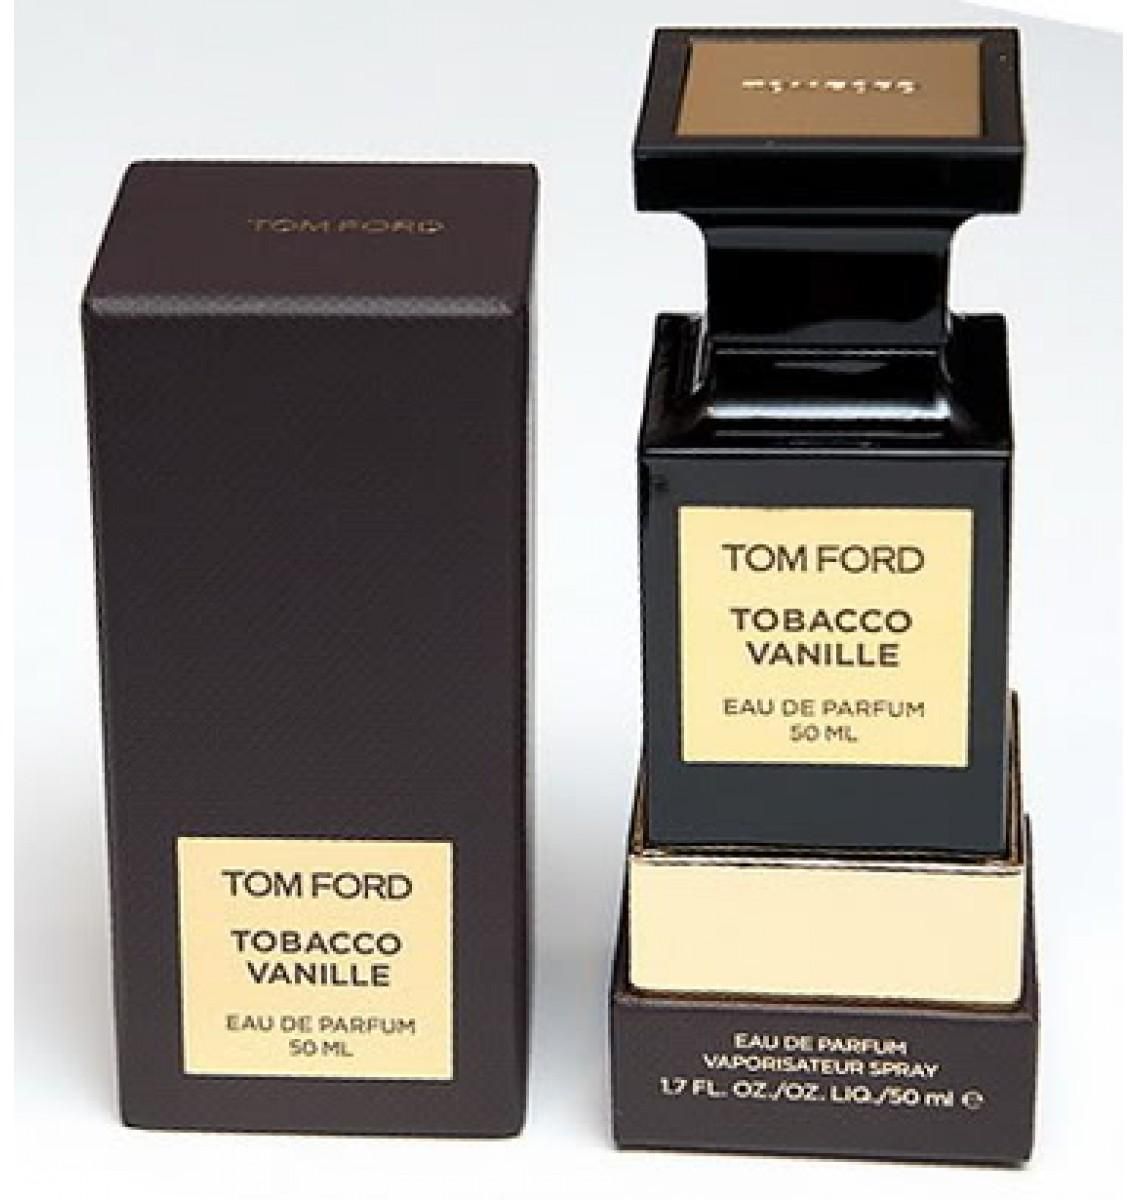 Tom Ford Tobacco Vanille EDP 50ml For Men price from fragrances in ...